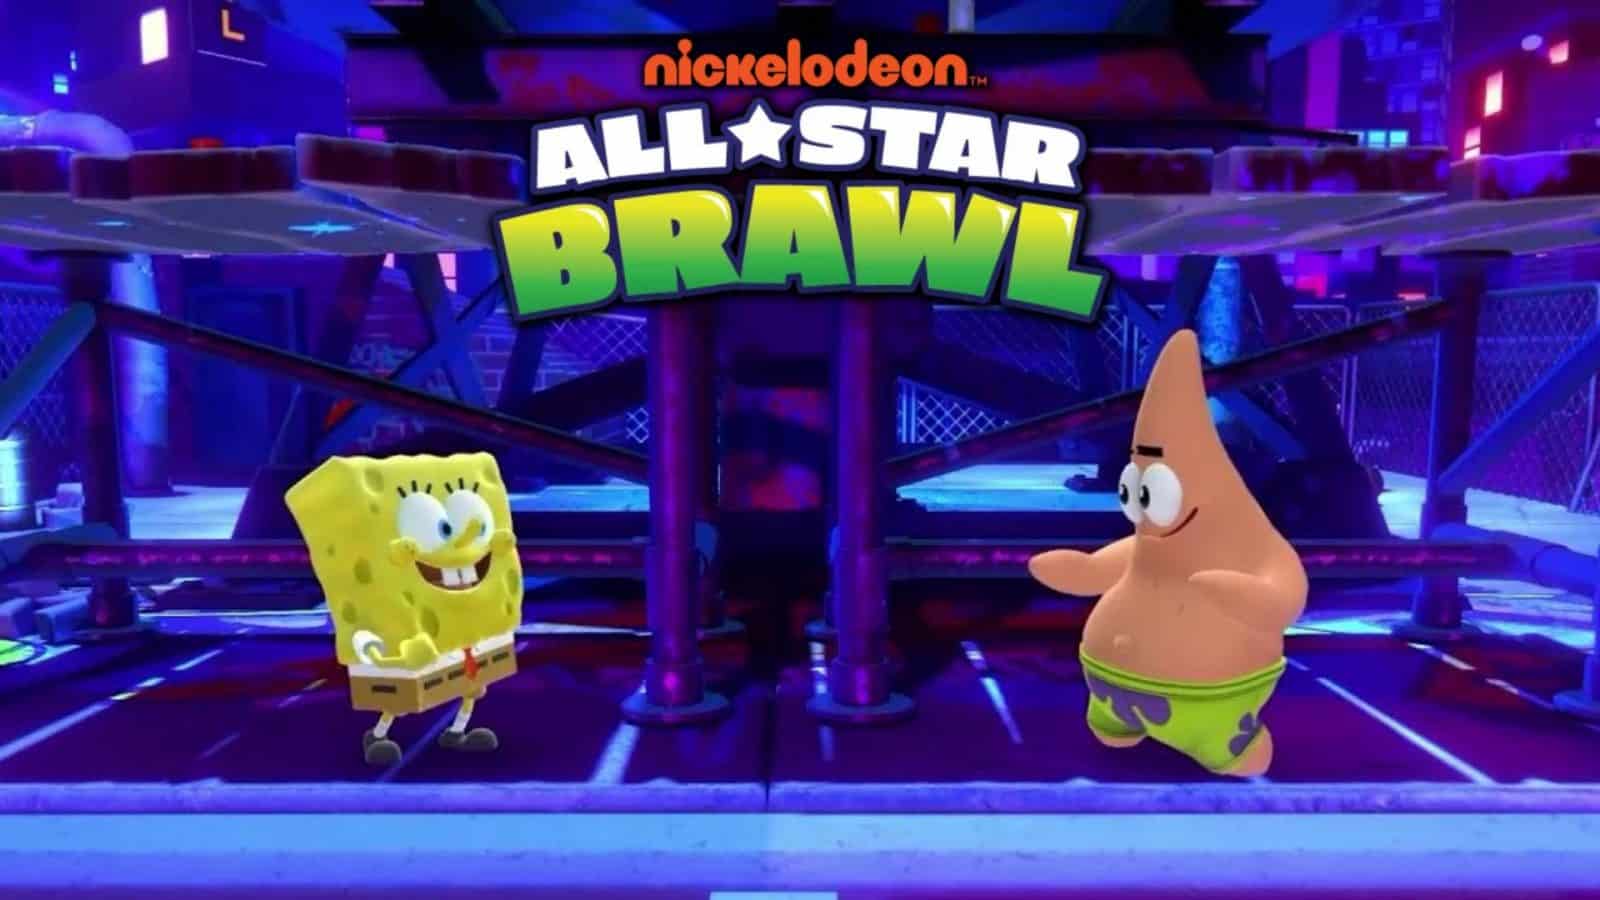 Nickelodeon All Star Brawl Nije karakters E1652194625771